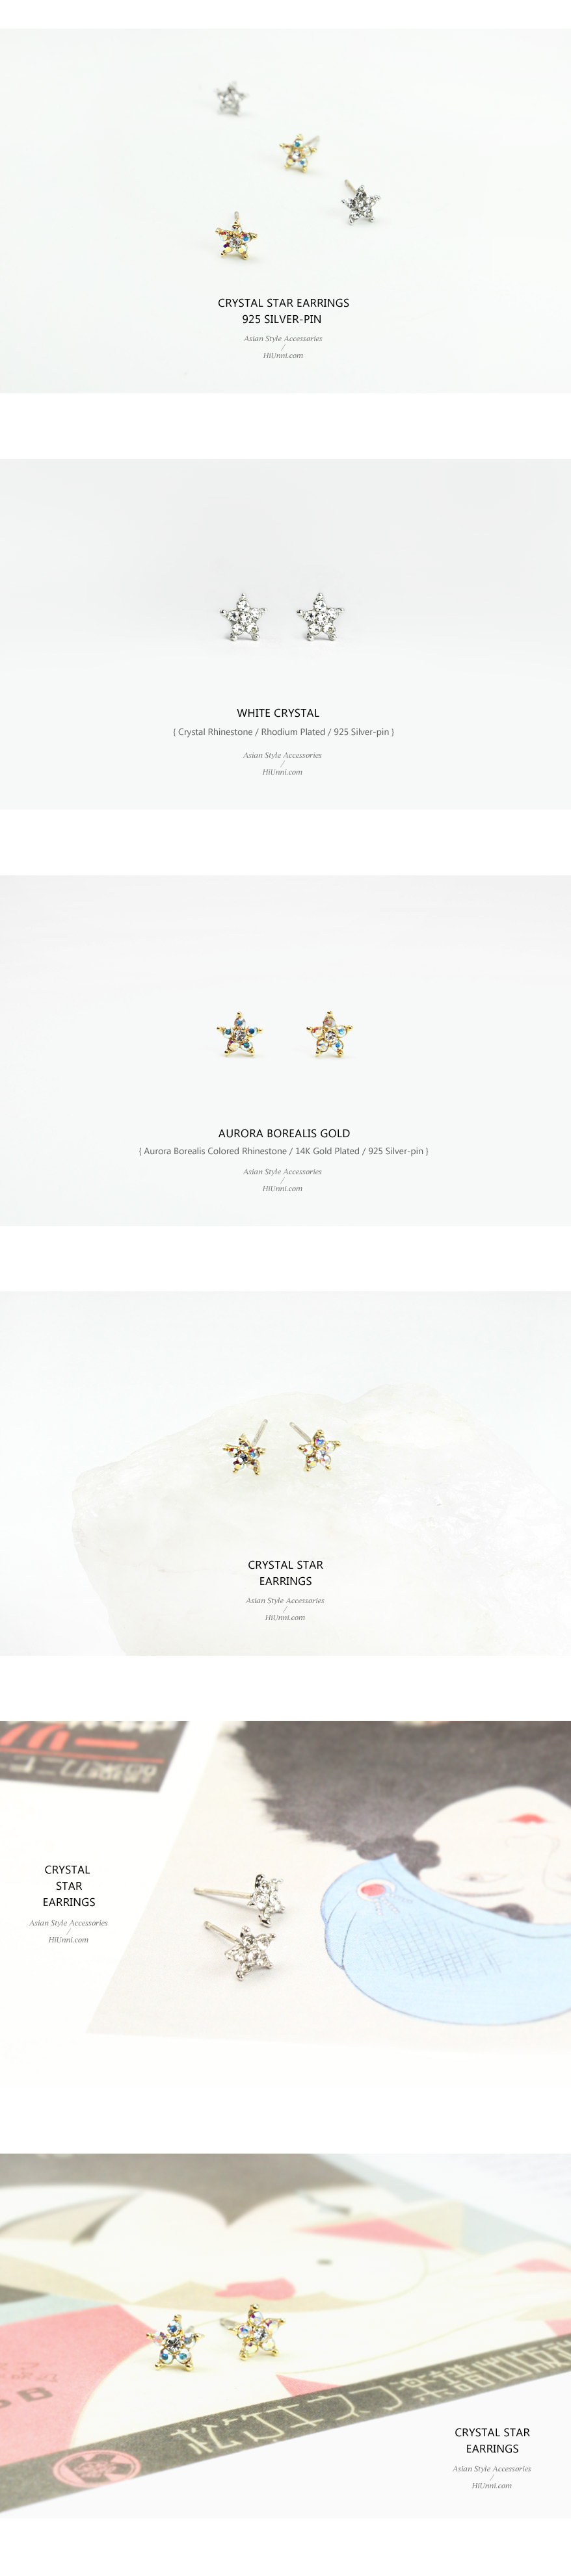 accessories_ear_stud_earrings_korean_asian-style_Crystal_Rhinestone_925-silver_Rhodium-Plated_14K-Gold-Plated_Nickel-Free_Star_1